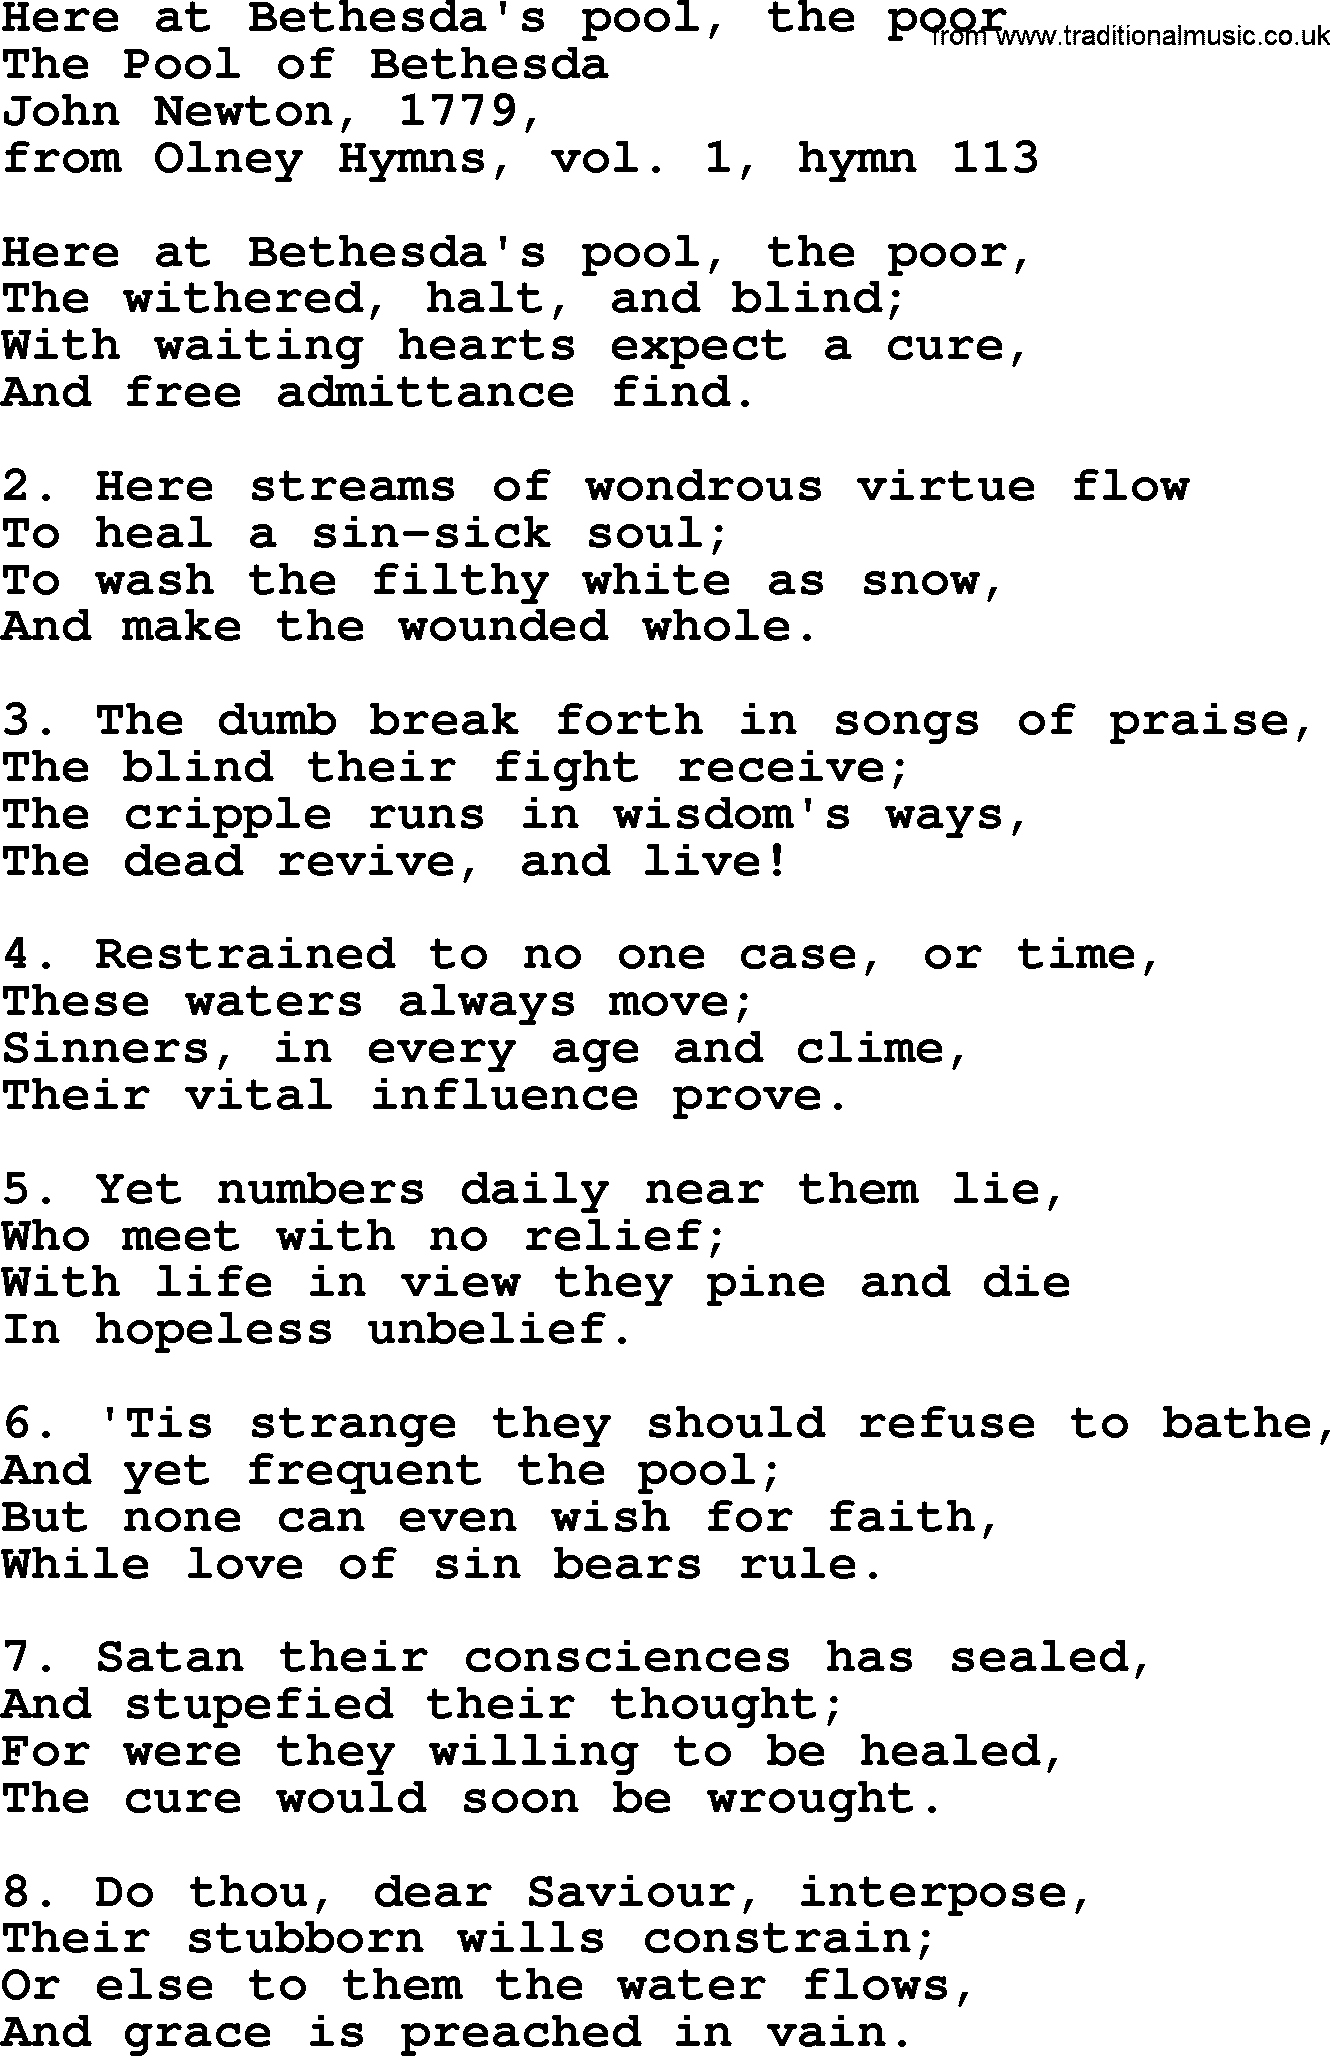 John Newton hymn: Here At Bethesda's Pool, The Poor, lyrics